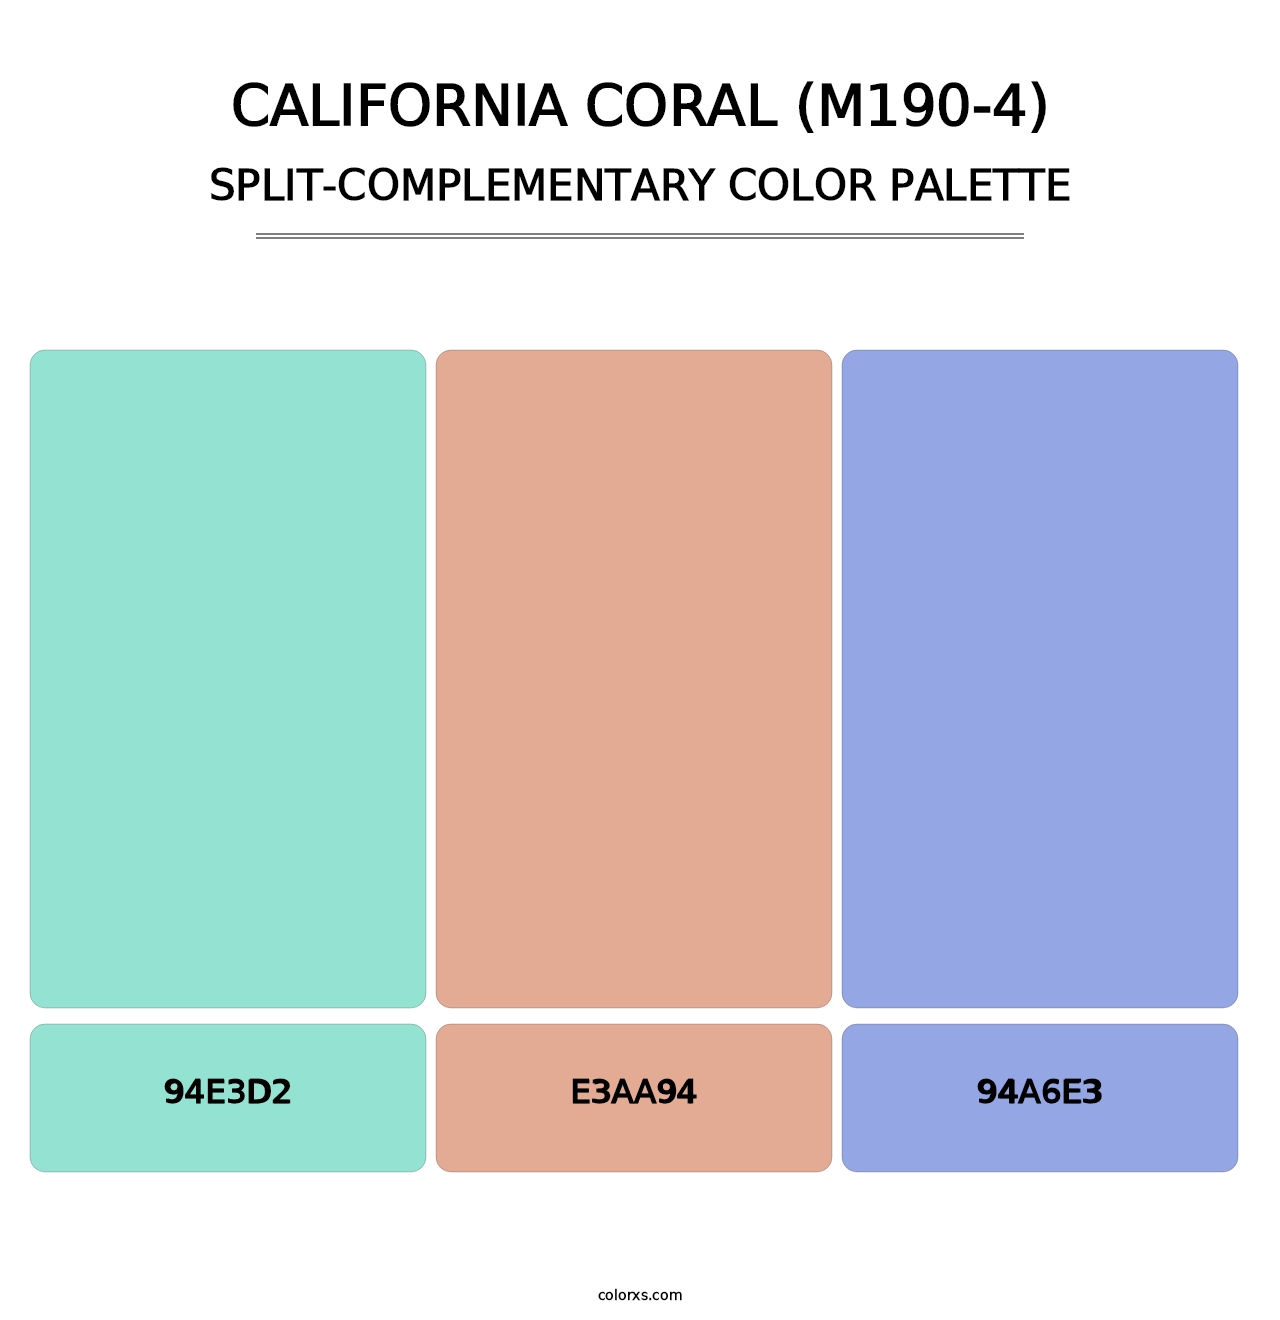 California Coral (M190-4) - Split-Complementary Color Palette